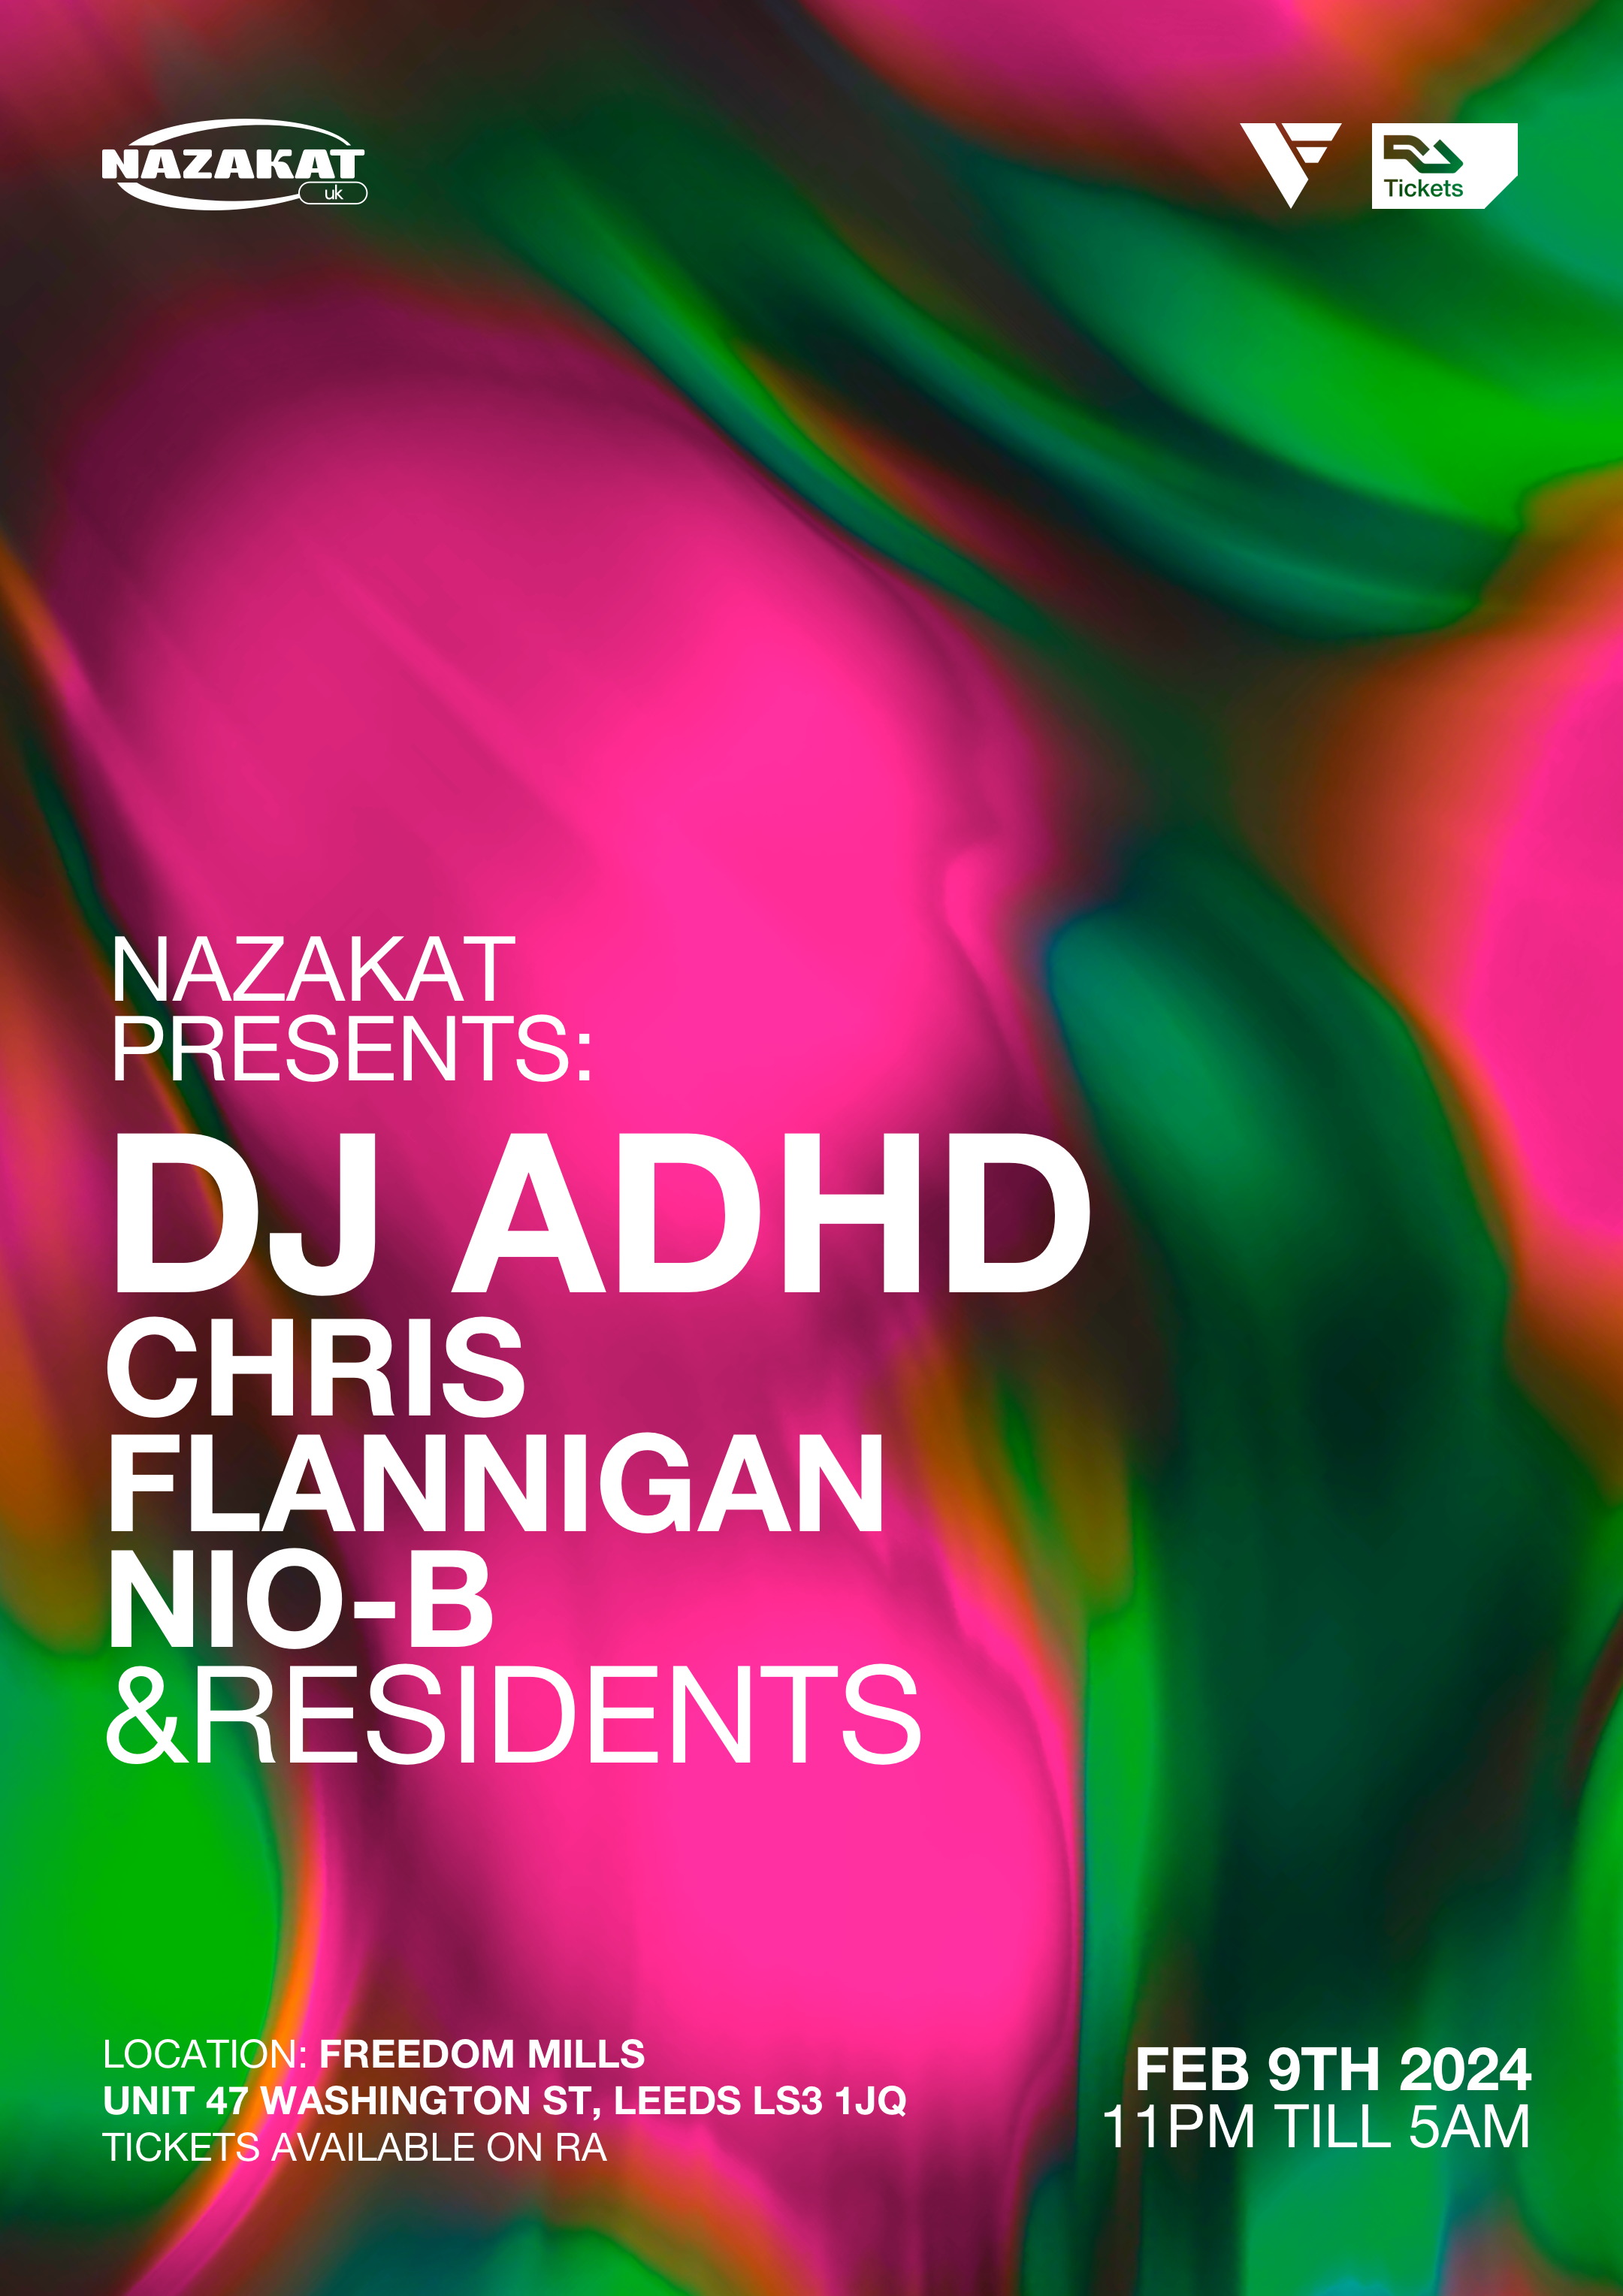 NAZAKAT PRESENTS: DJ ADHD, Chris Flannigan, Nio-B - フライヤー表